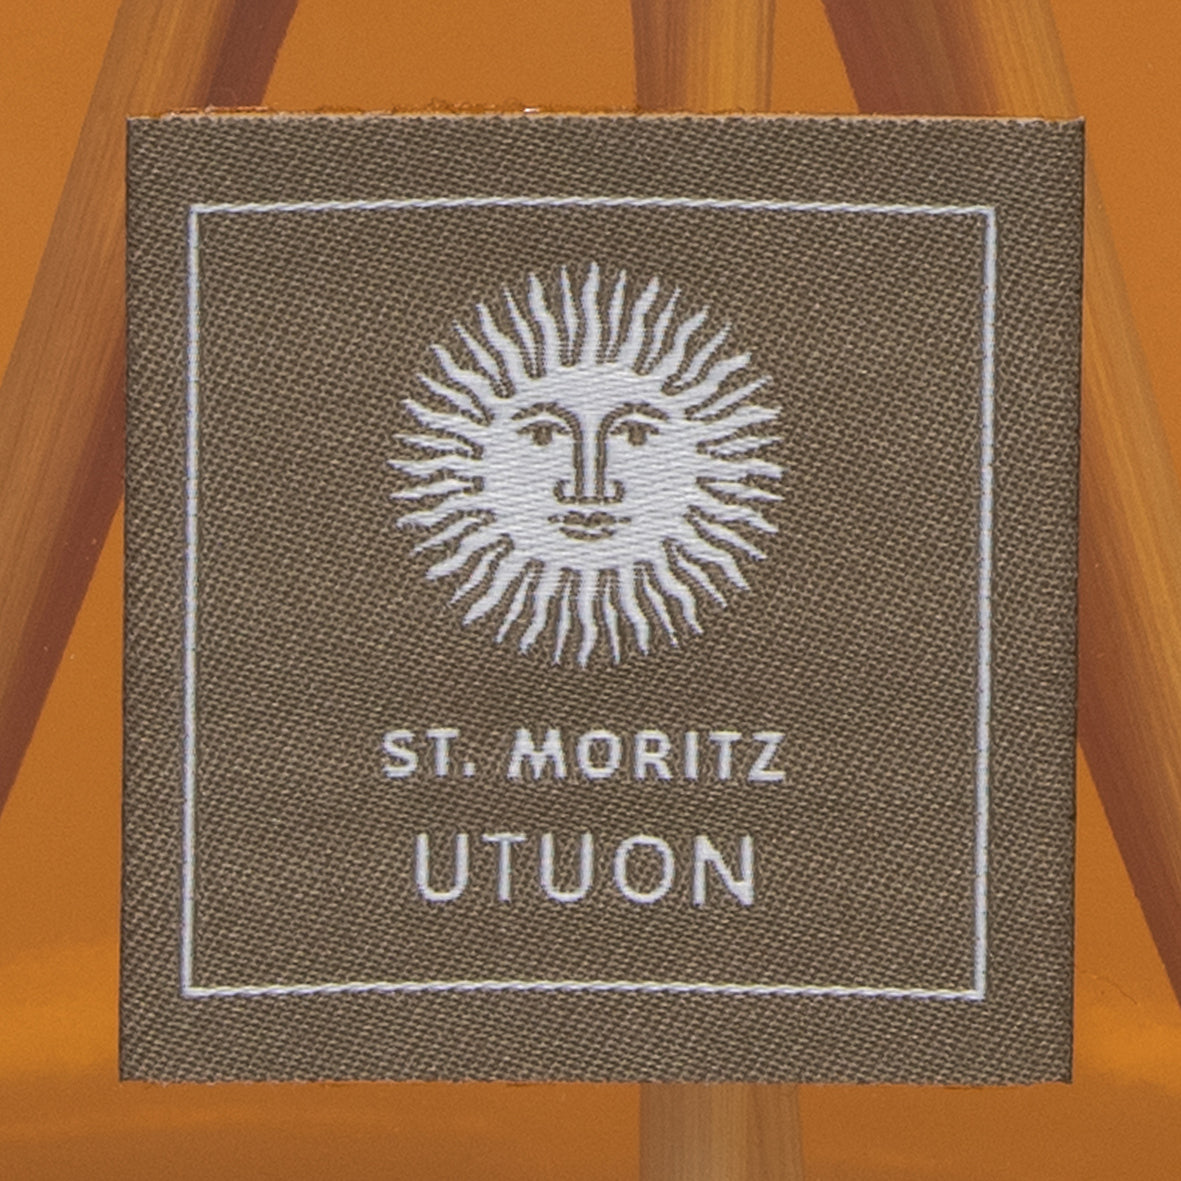 UDUR St.Moritz - UTUON room fragrance 100ml / 500ml